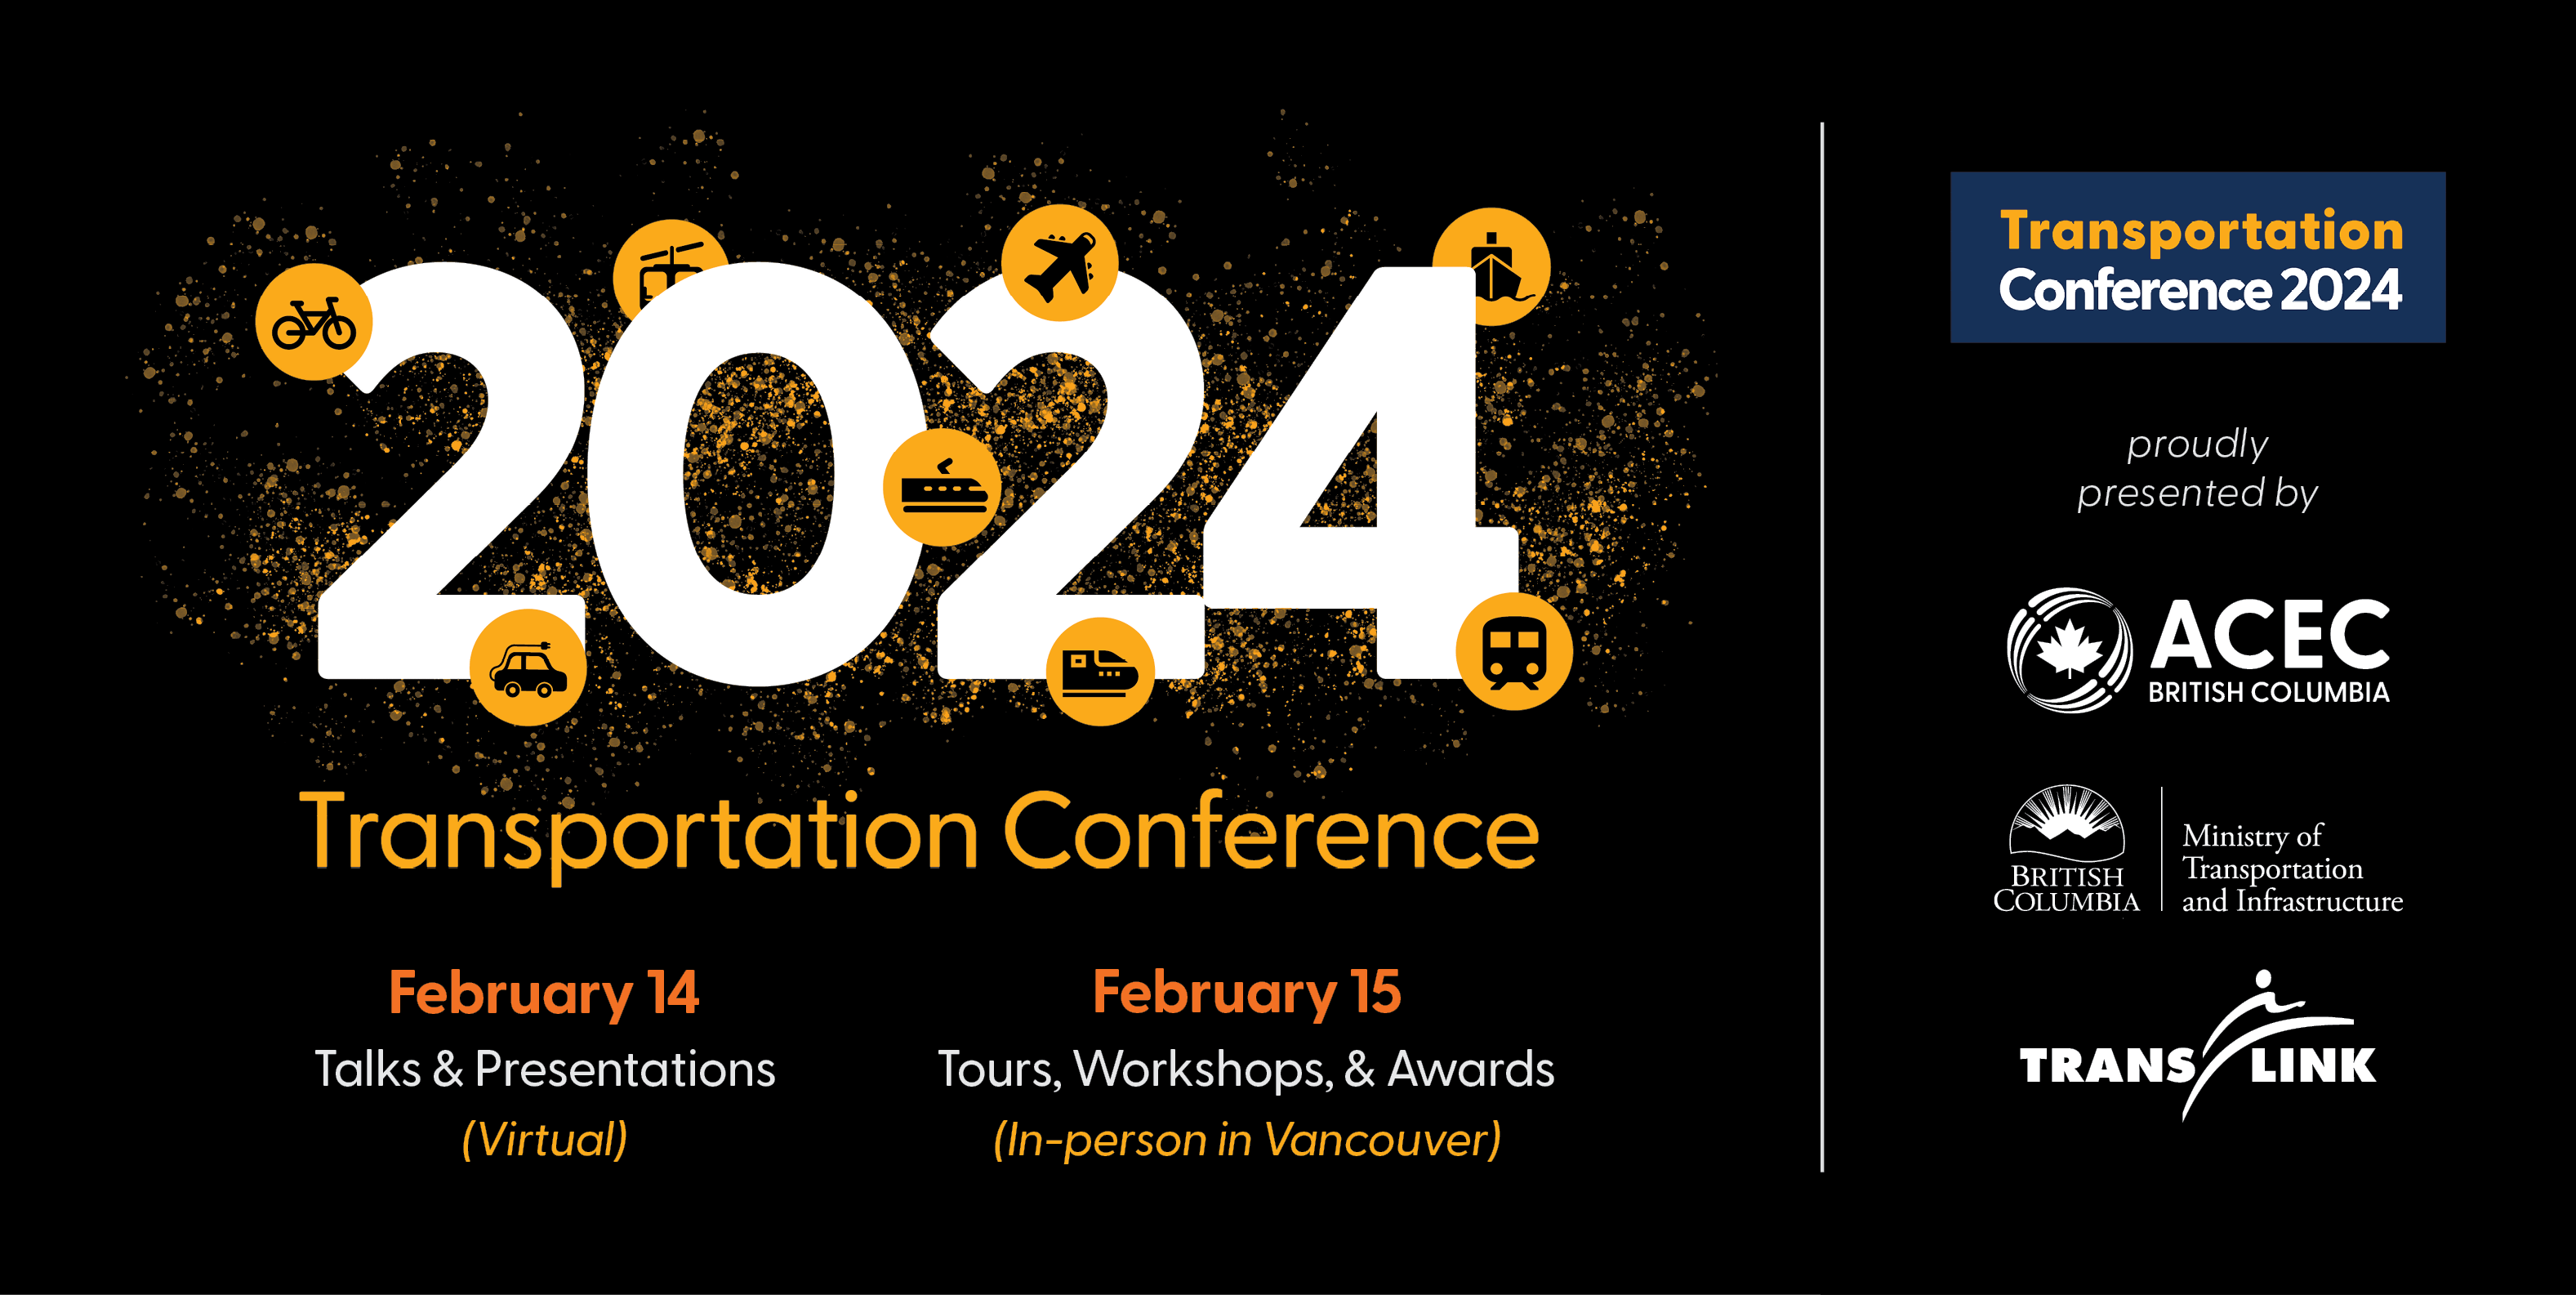 Transportation Conference 2024